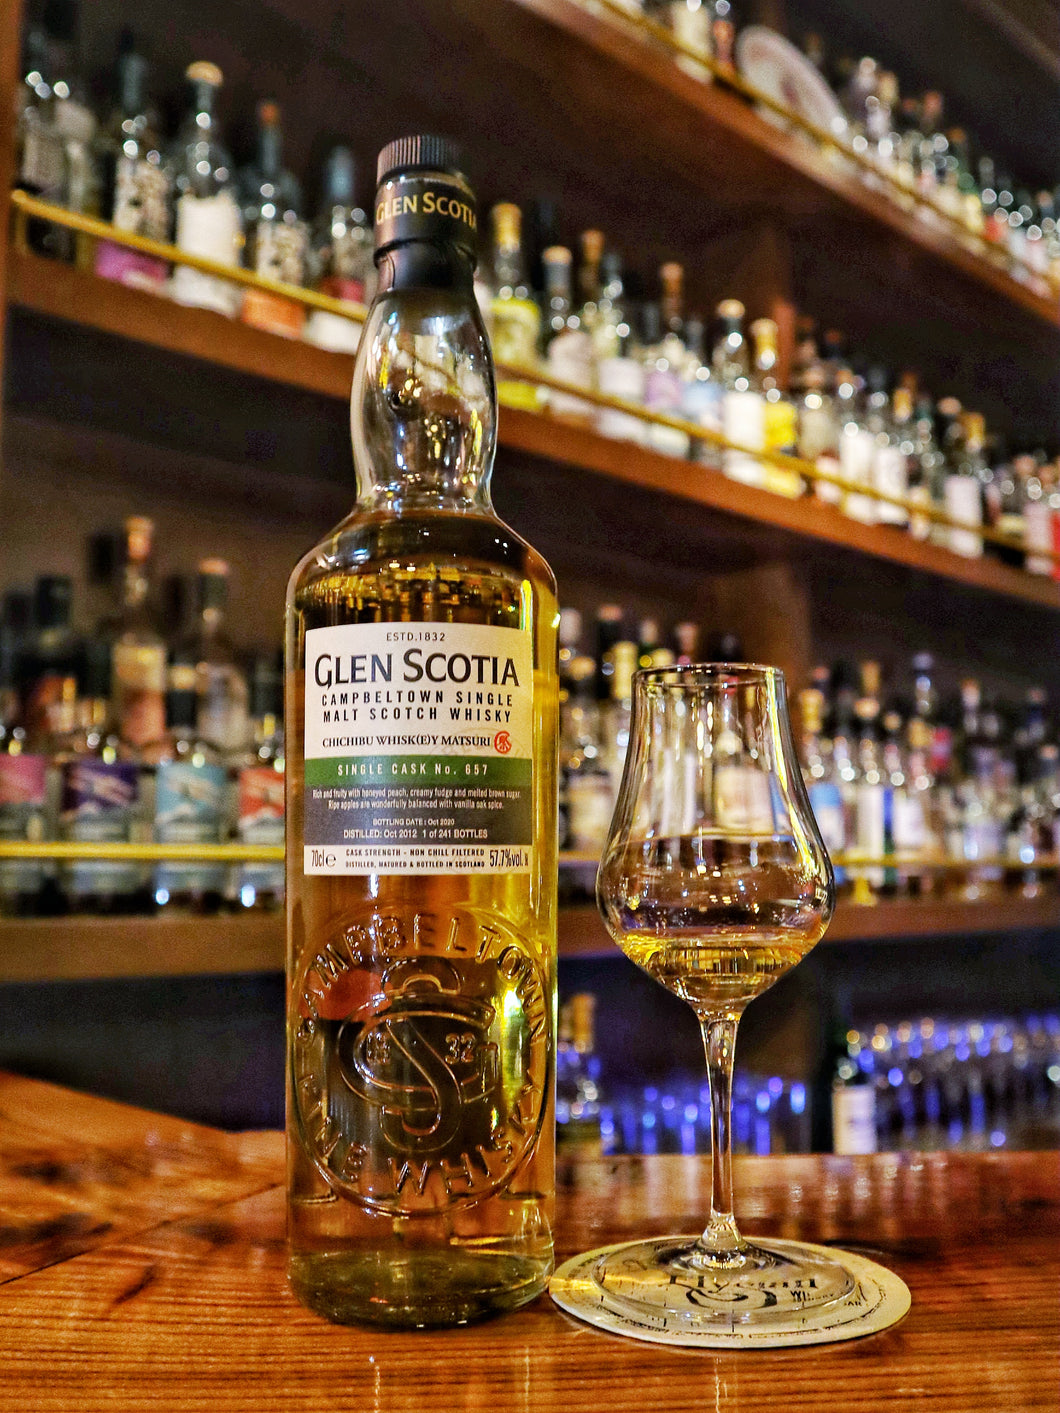 Glen Scotia for Chichibu Whiskey Matsuri 2012 8yo Bourbon Cask, 57.7%